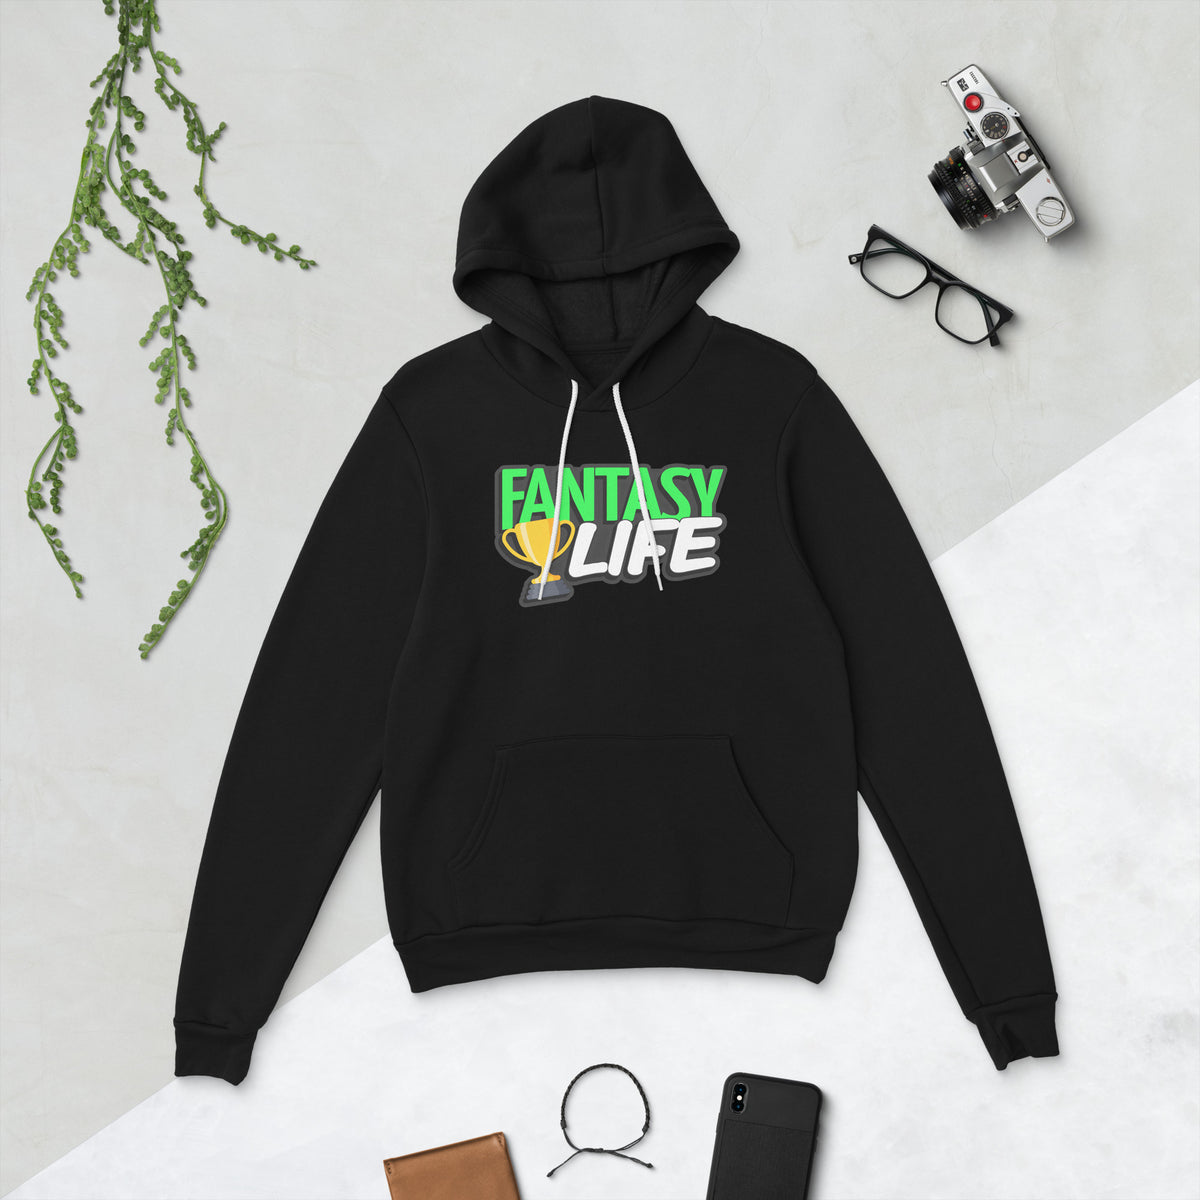 Fantasy life hoodie